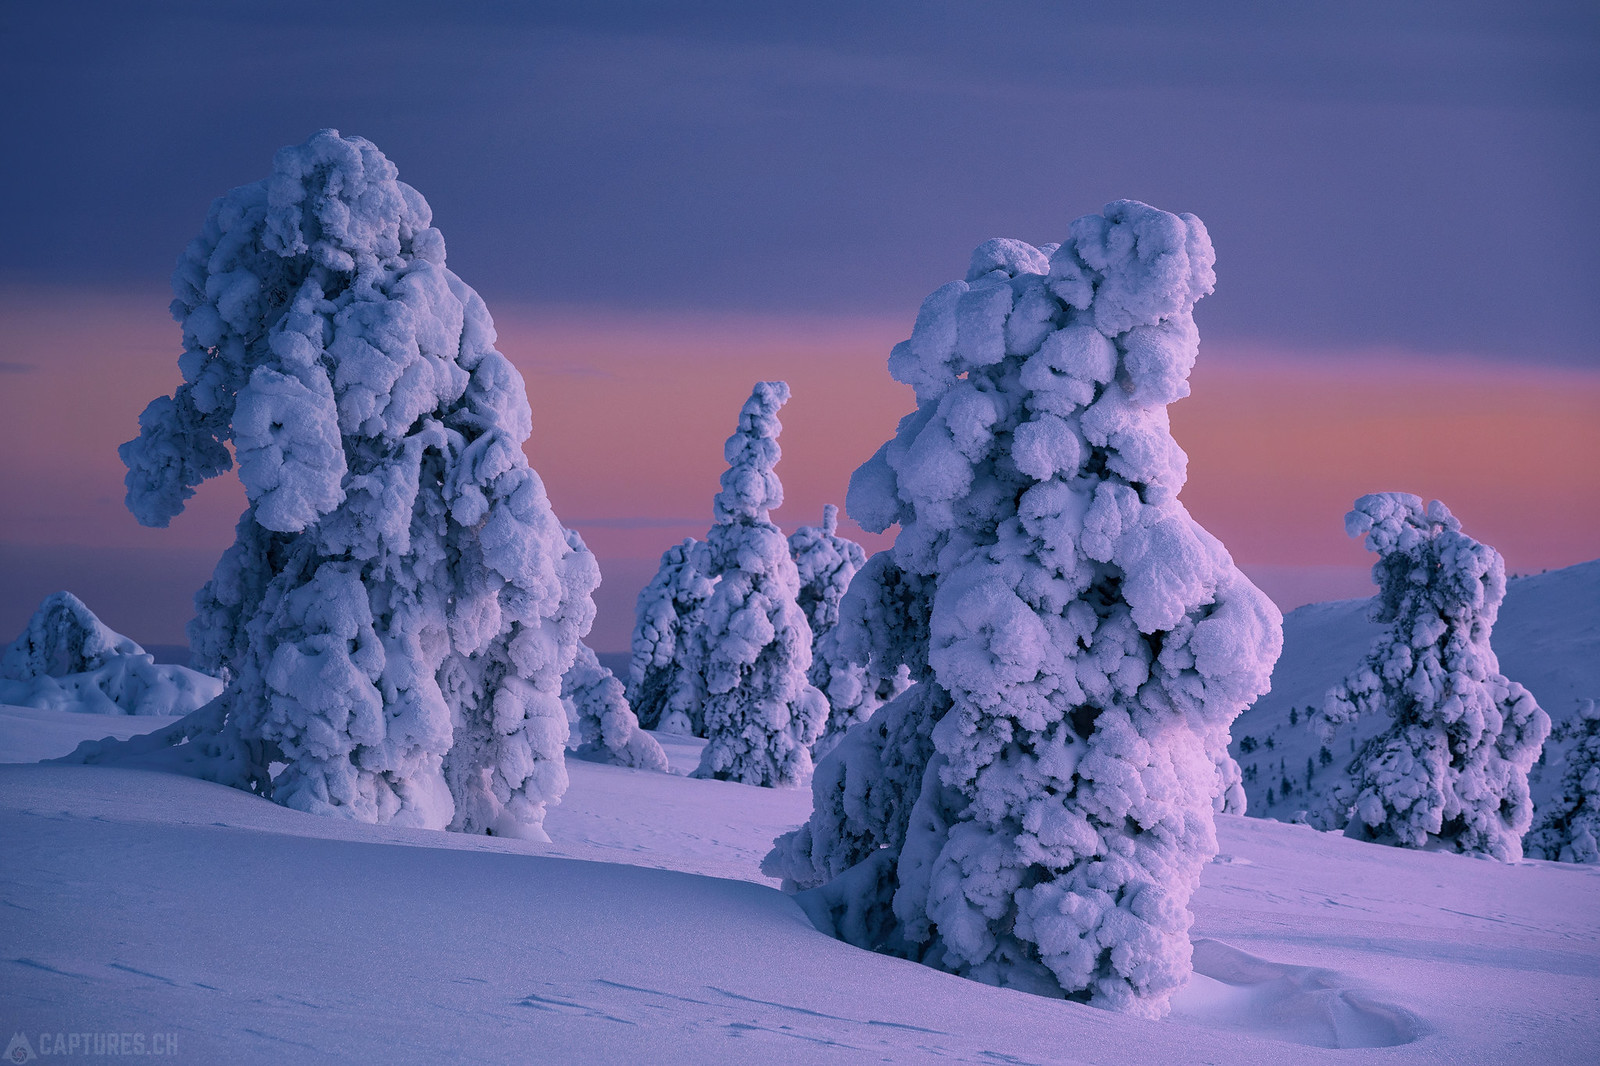 Trees in the winter landscape - Äkäslompolo